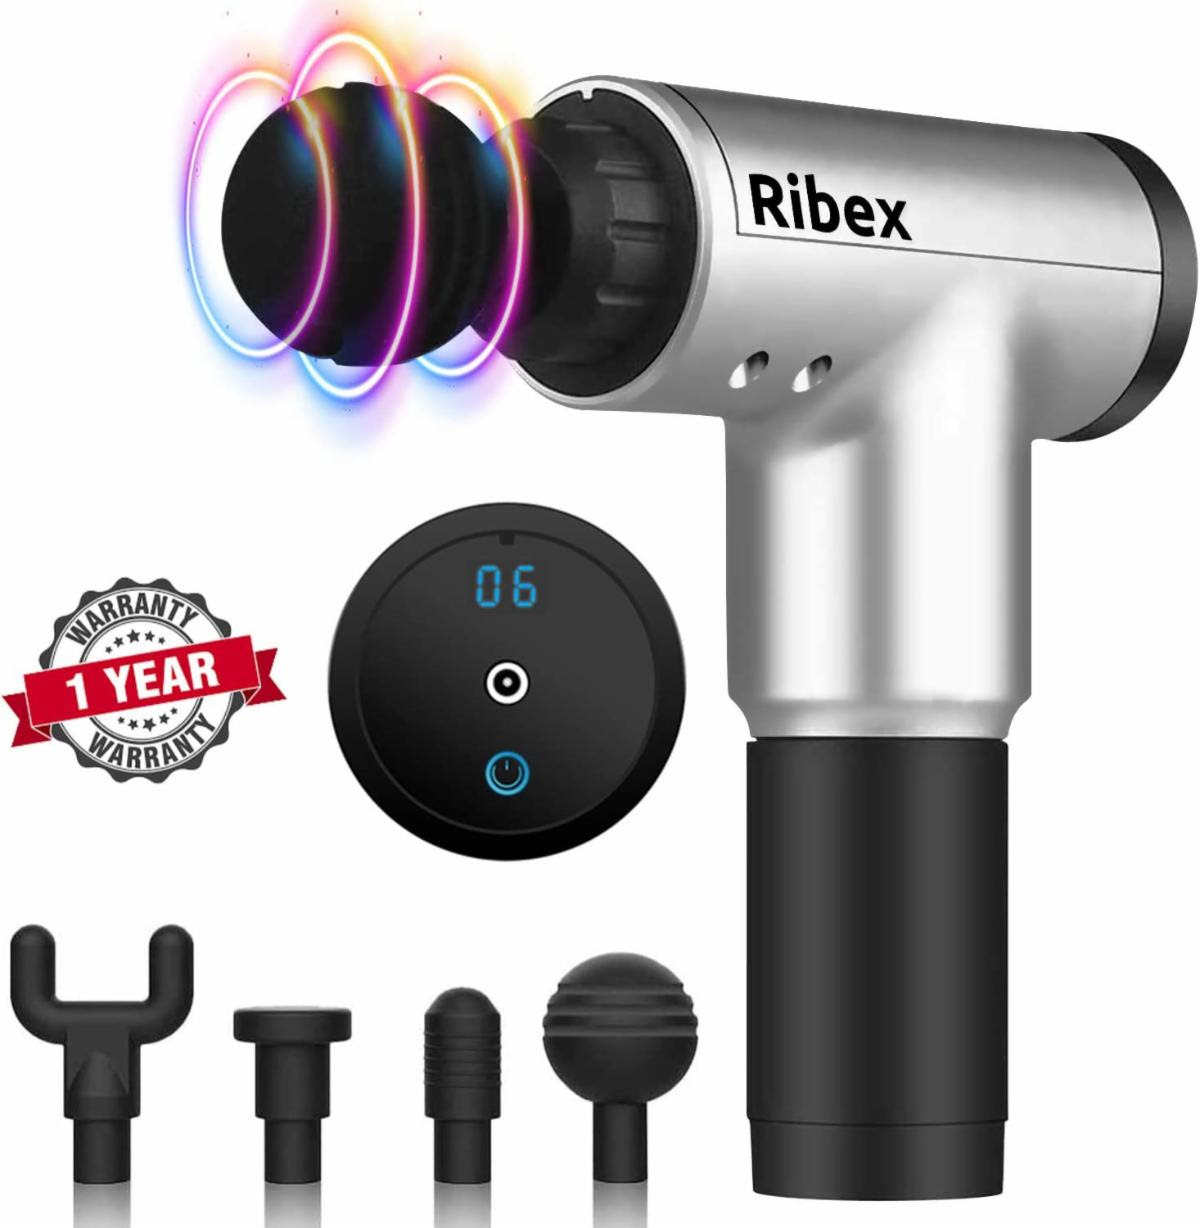 Ribex A6 Pro Muscle Massage Gun - Deep Tissue Percussive Handheld Cordless Massage